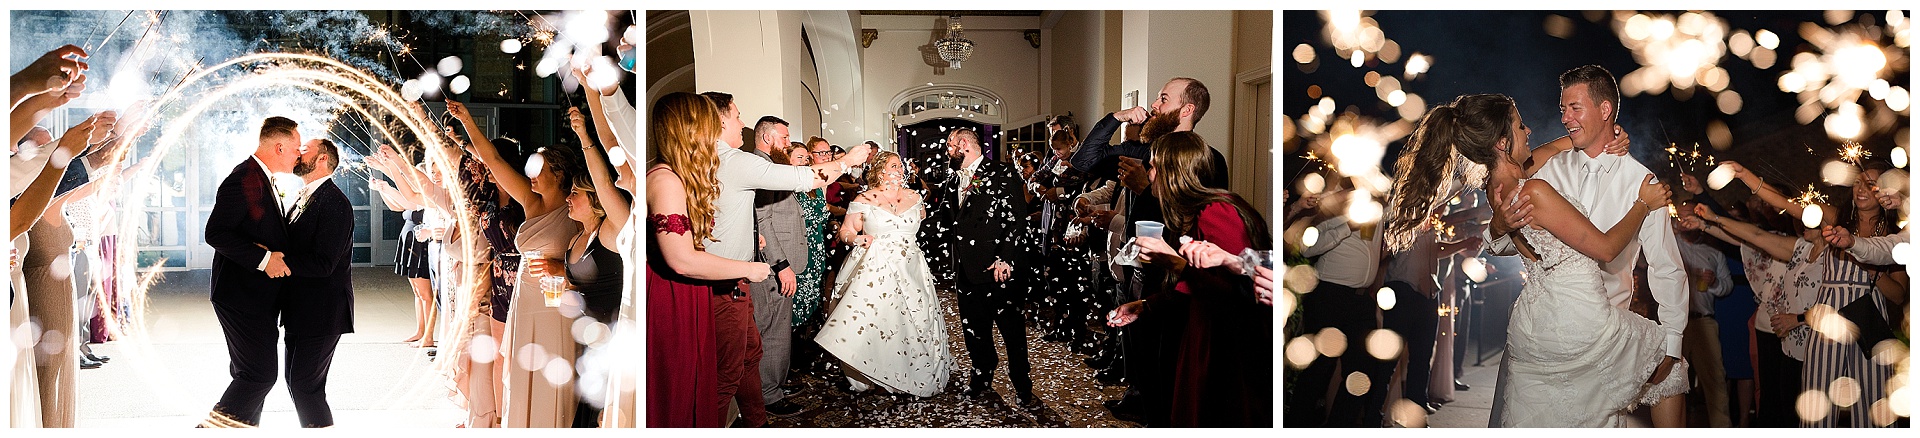 sparkler and confetti wedding reception exits